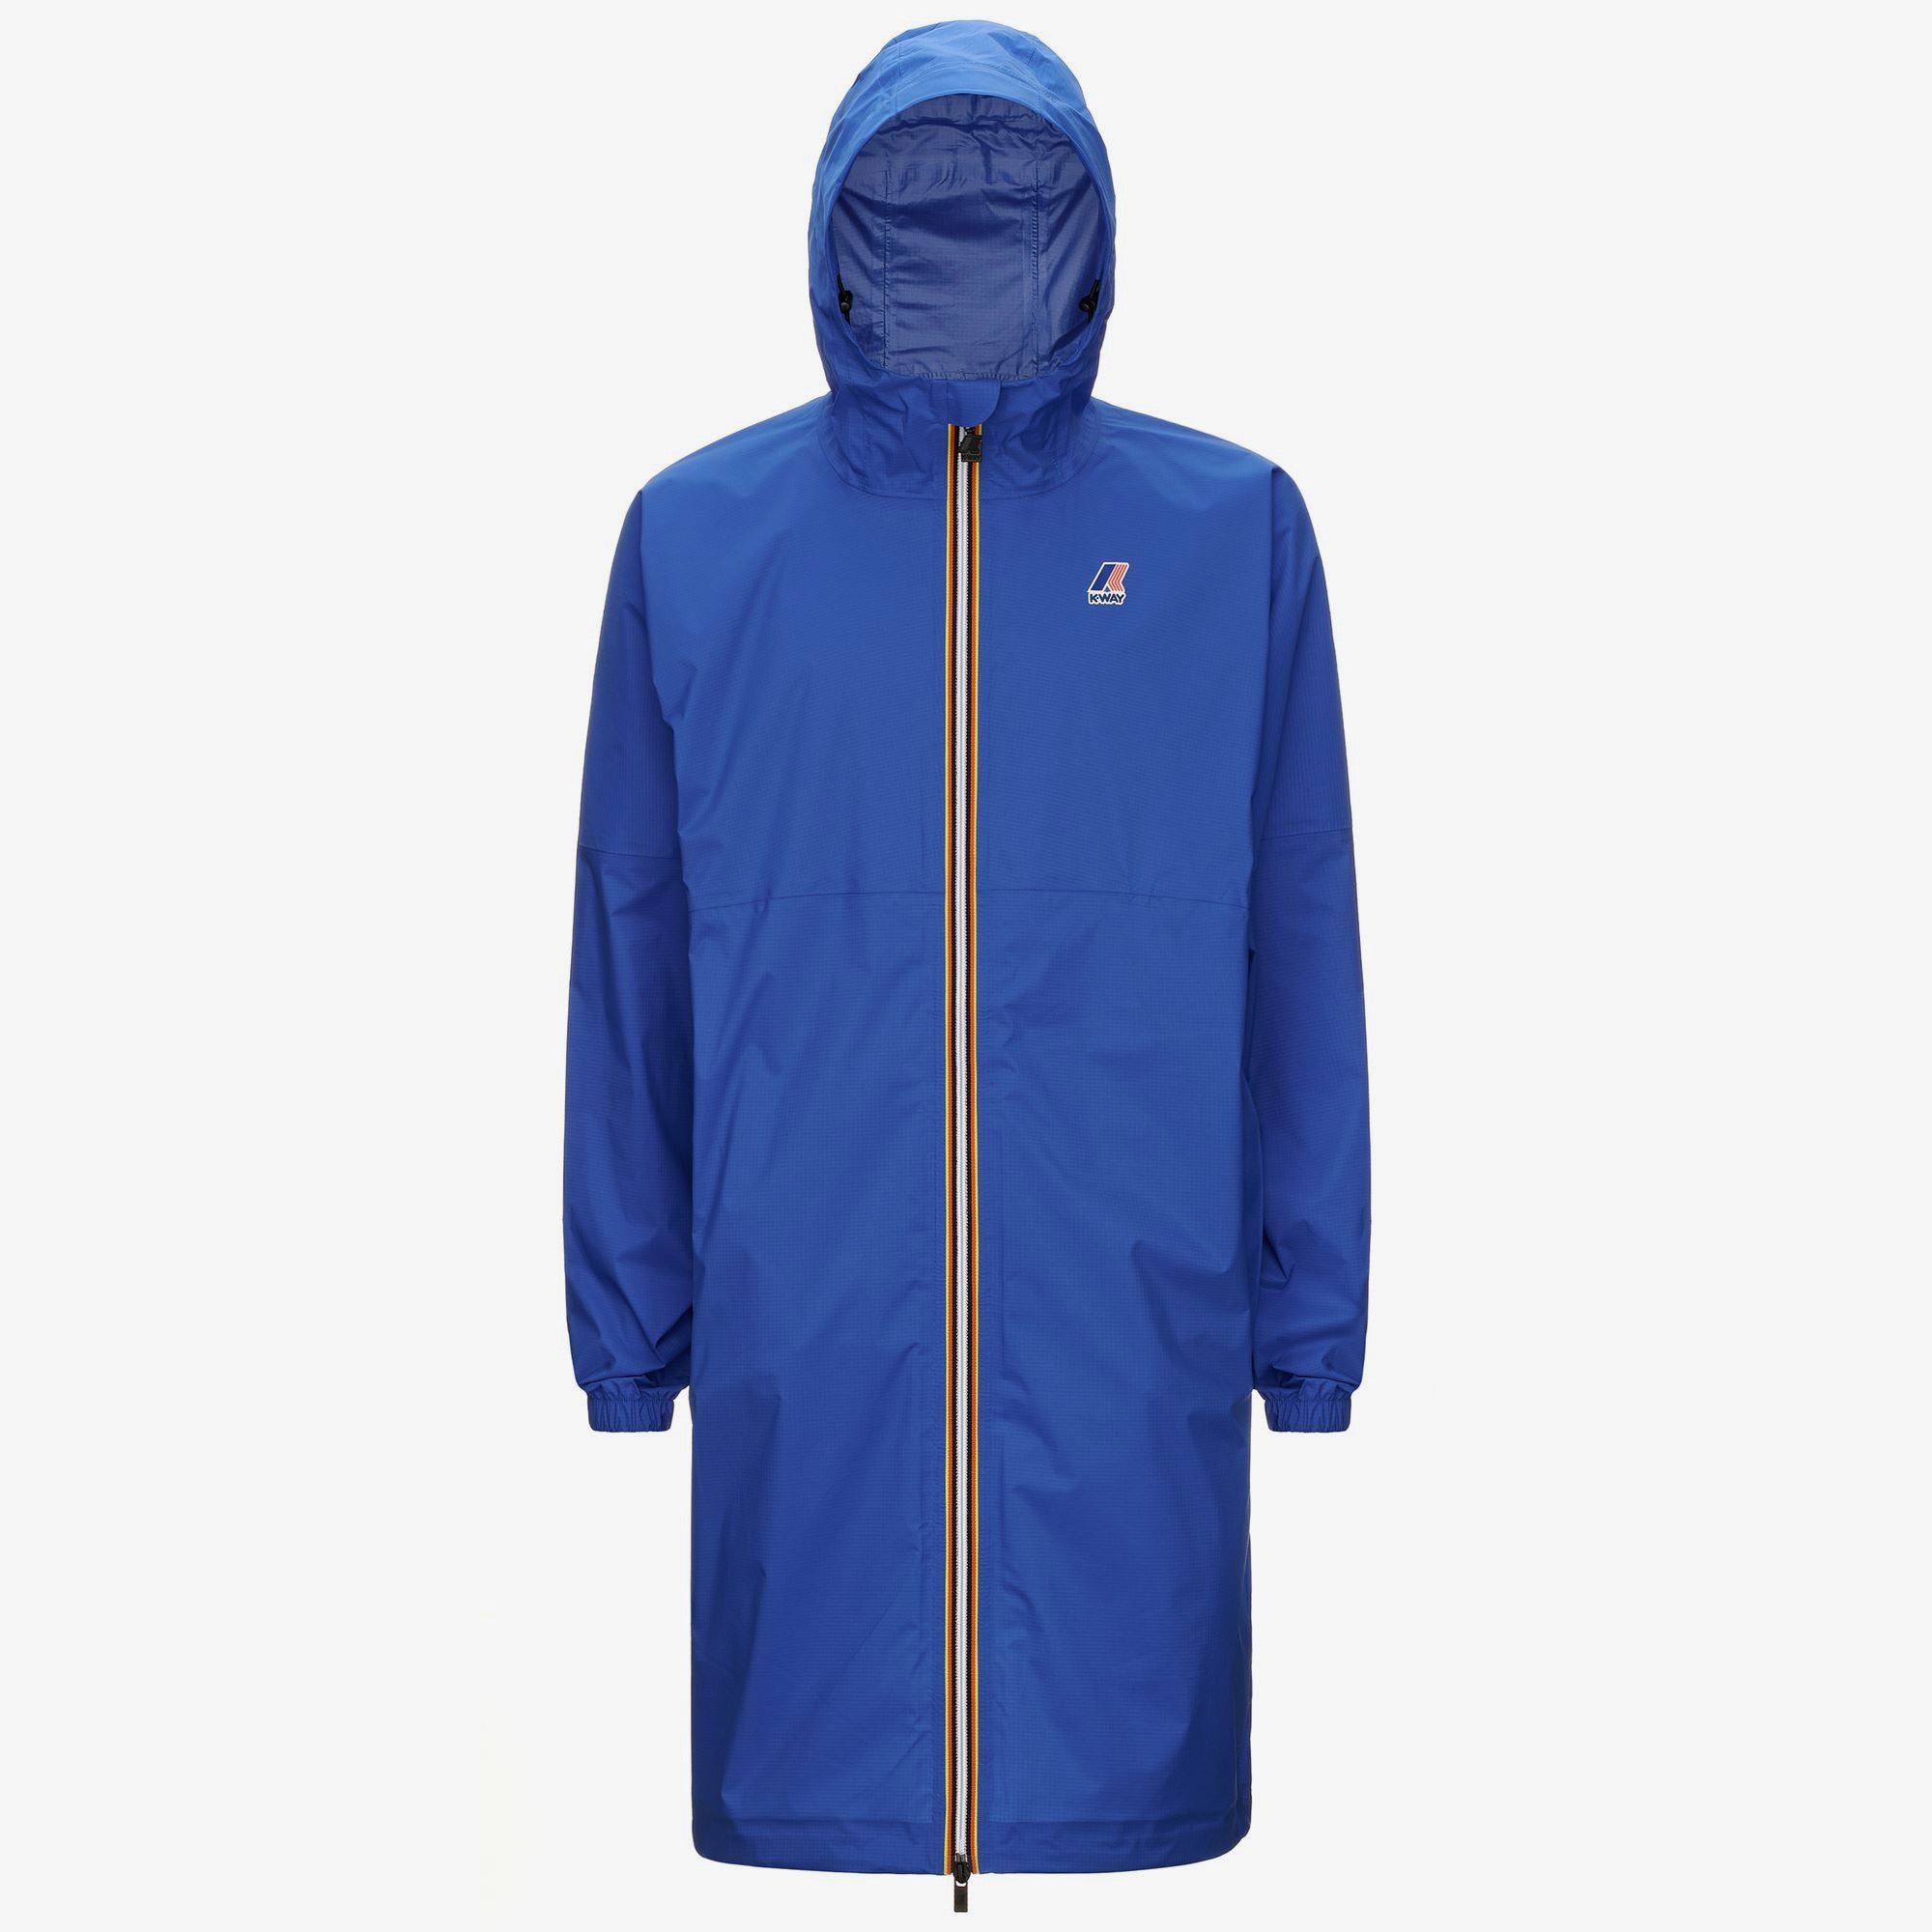 Eiffel - Unisex Waterproof Packable Long Rain Jacket in Blue Royal Marine